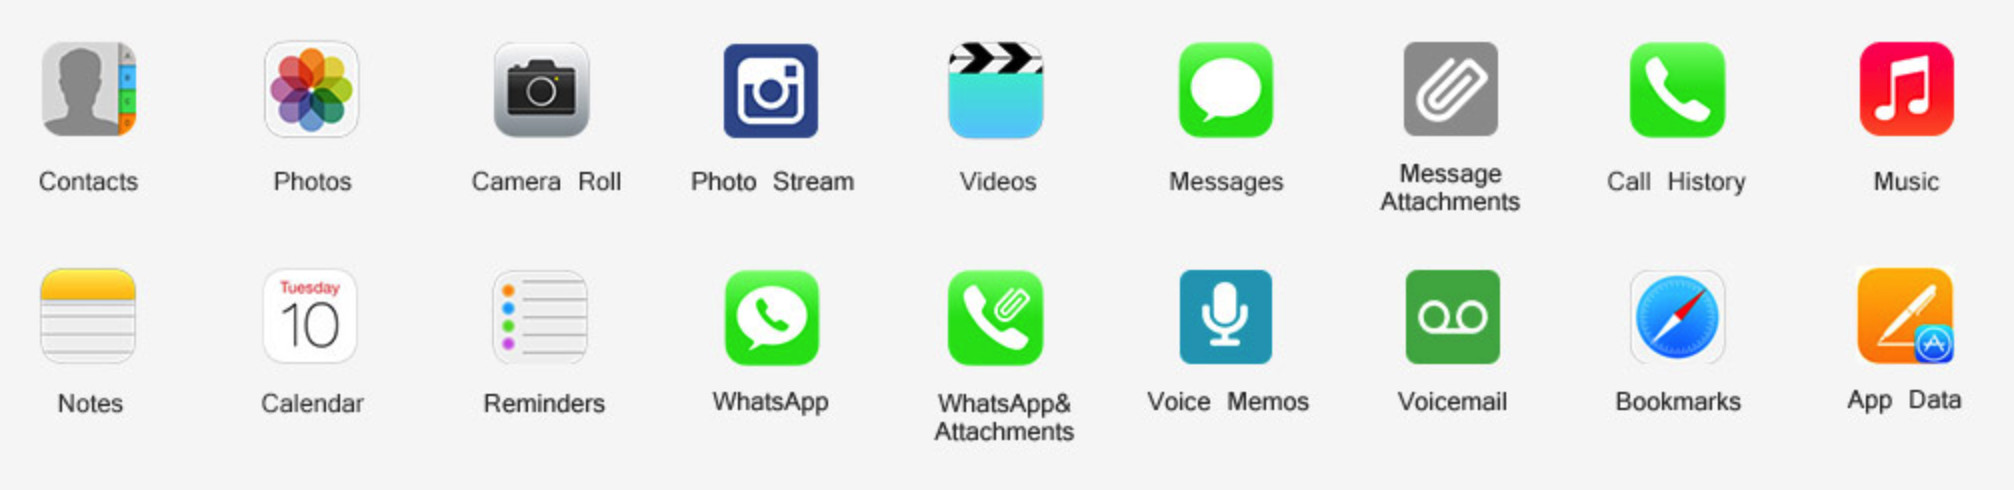 Gihosoft: Ứng dụng khôi phục dữ liệu iPhone 3